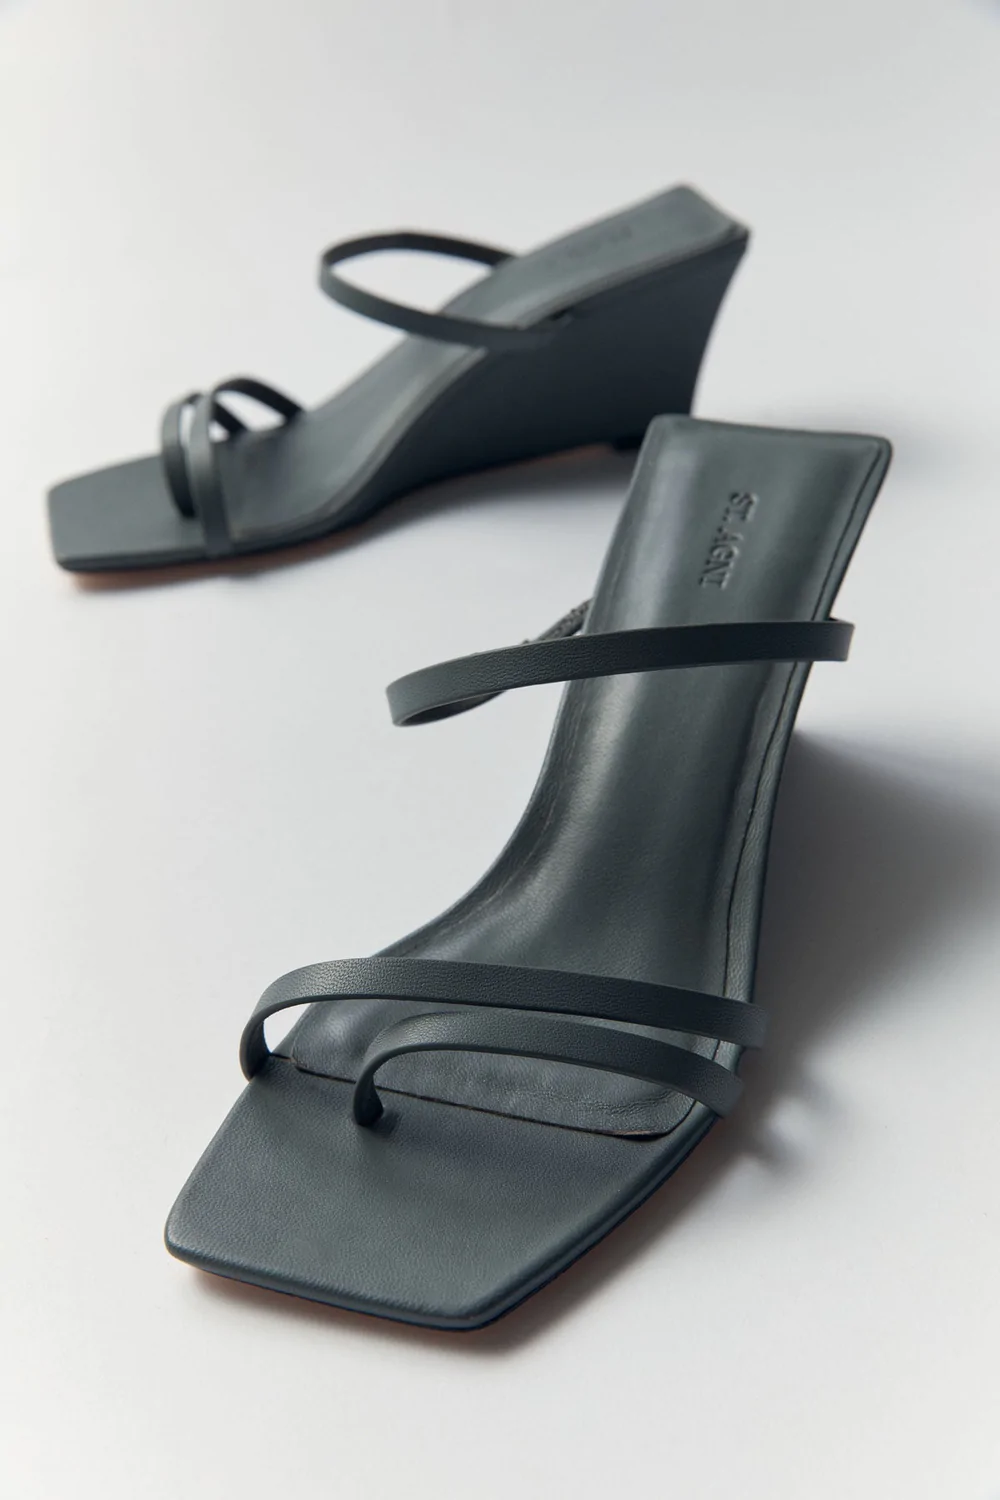 Product Image for Minimal Wedge Heel, Castor Grey